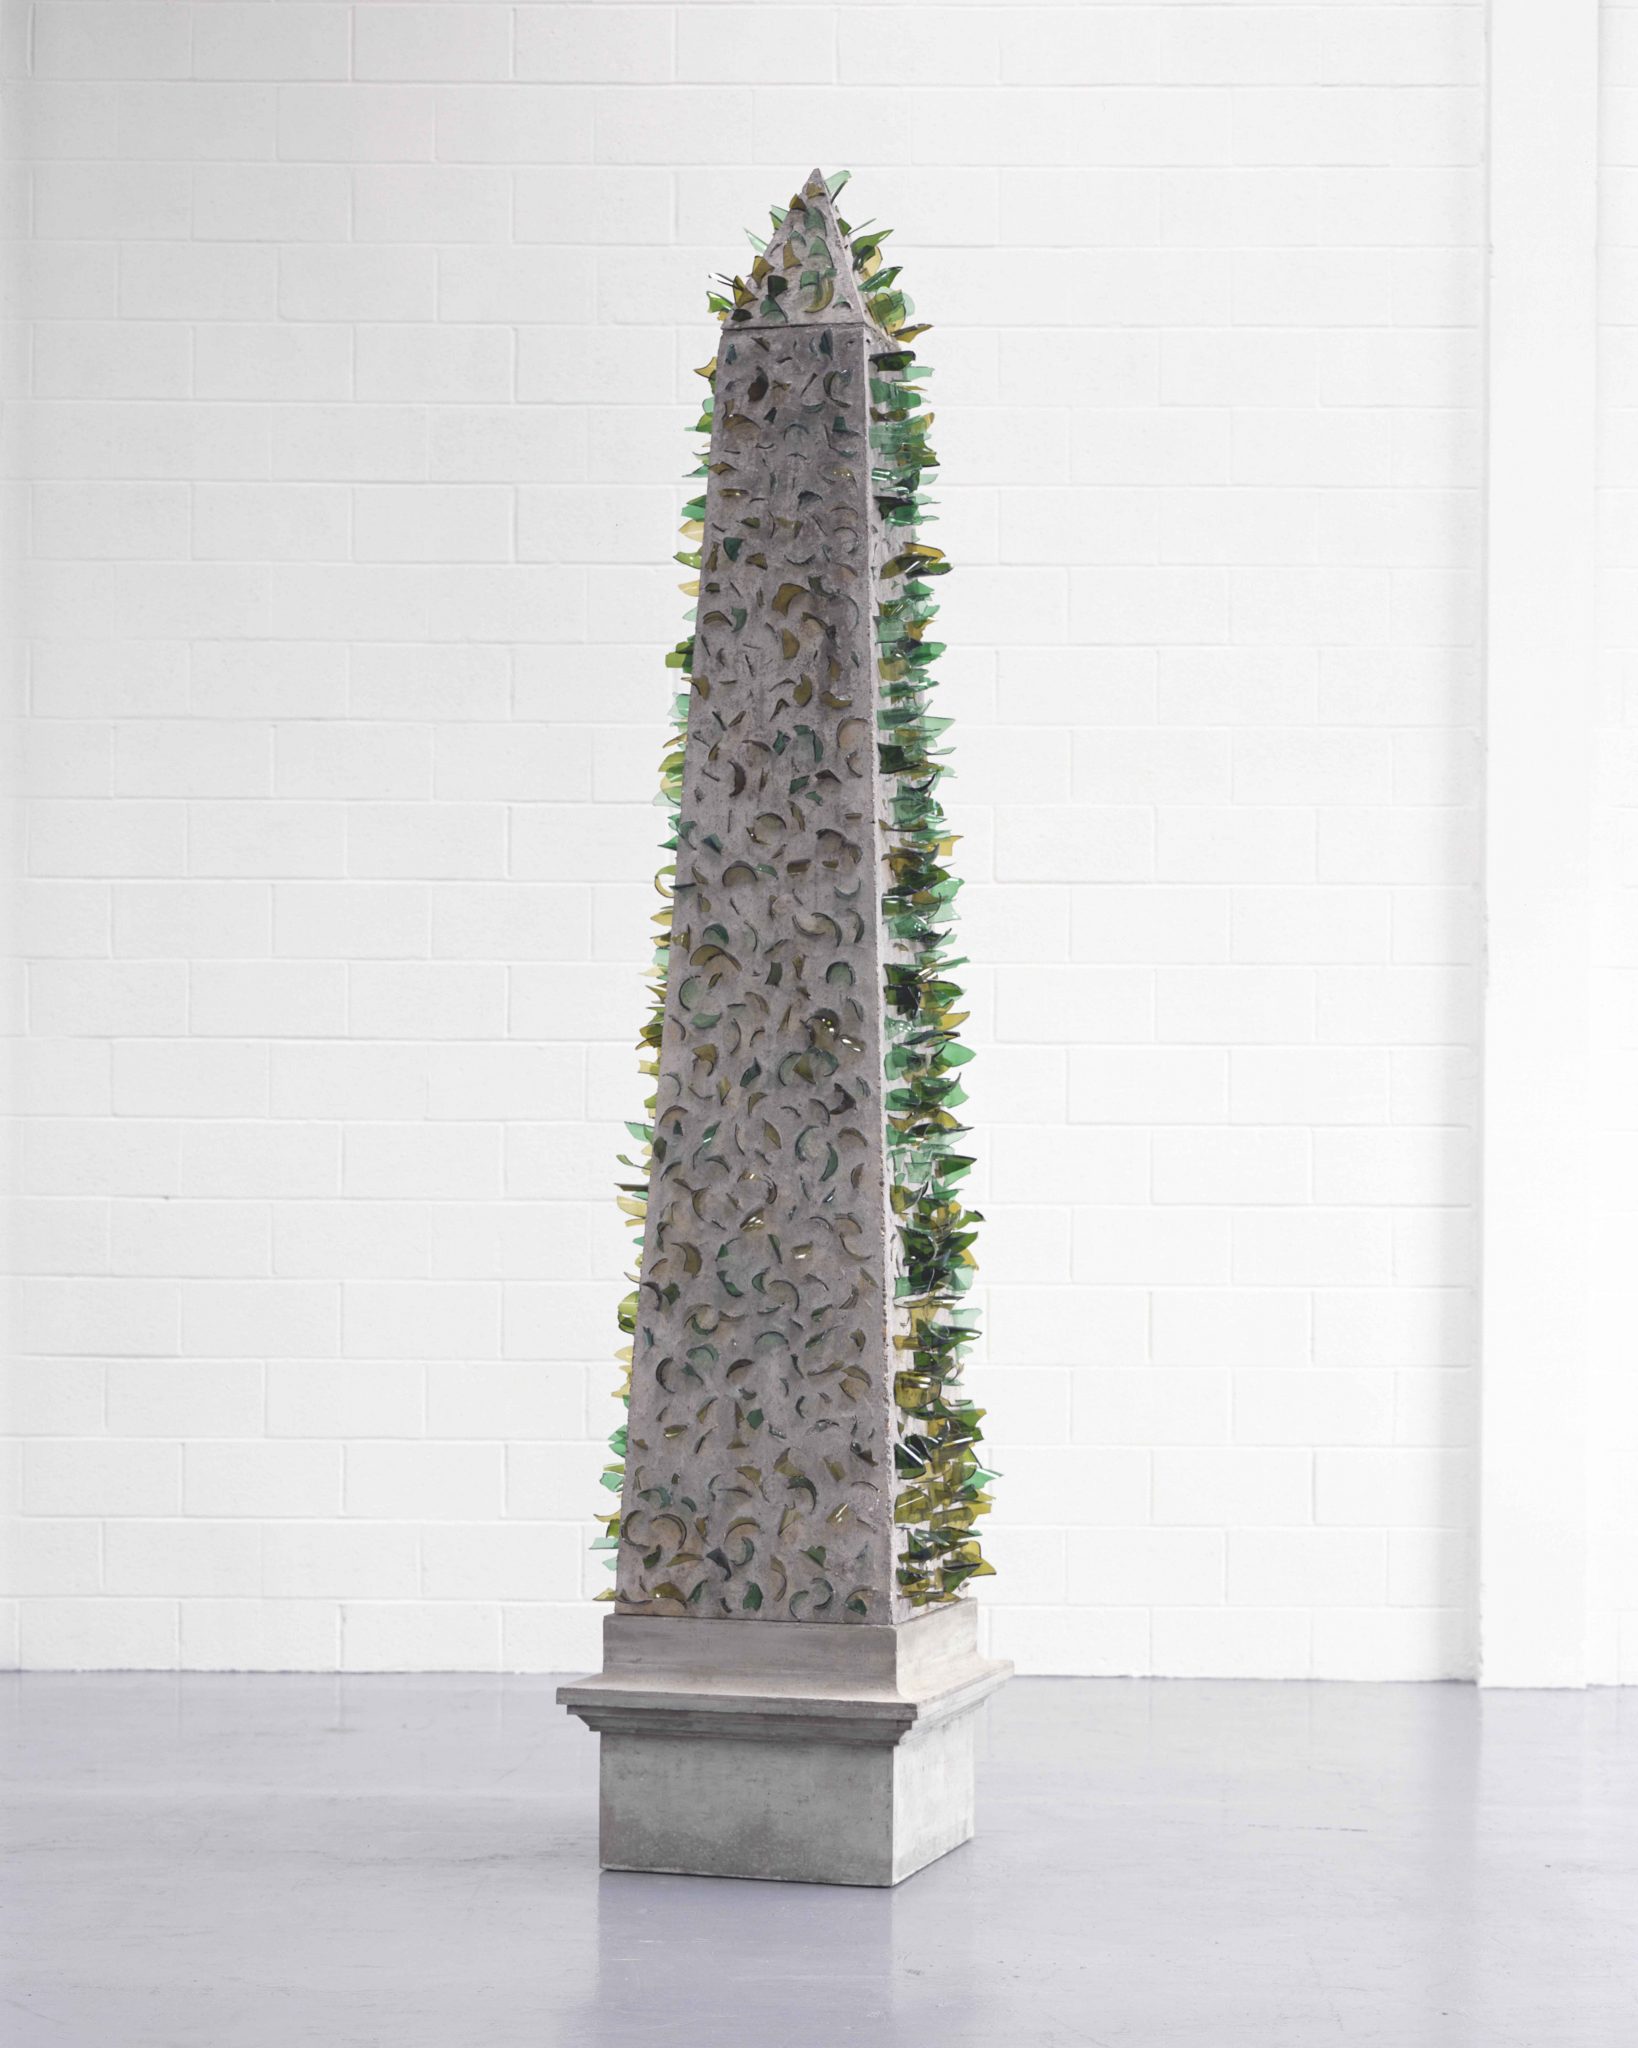 Obelisk, 2008. Courtesy the artist, Galleria Continua, San Gimignano, Beijing and Le Moulin